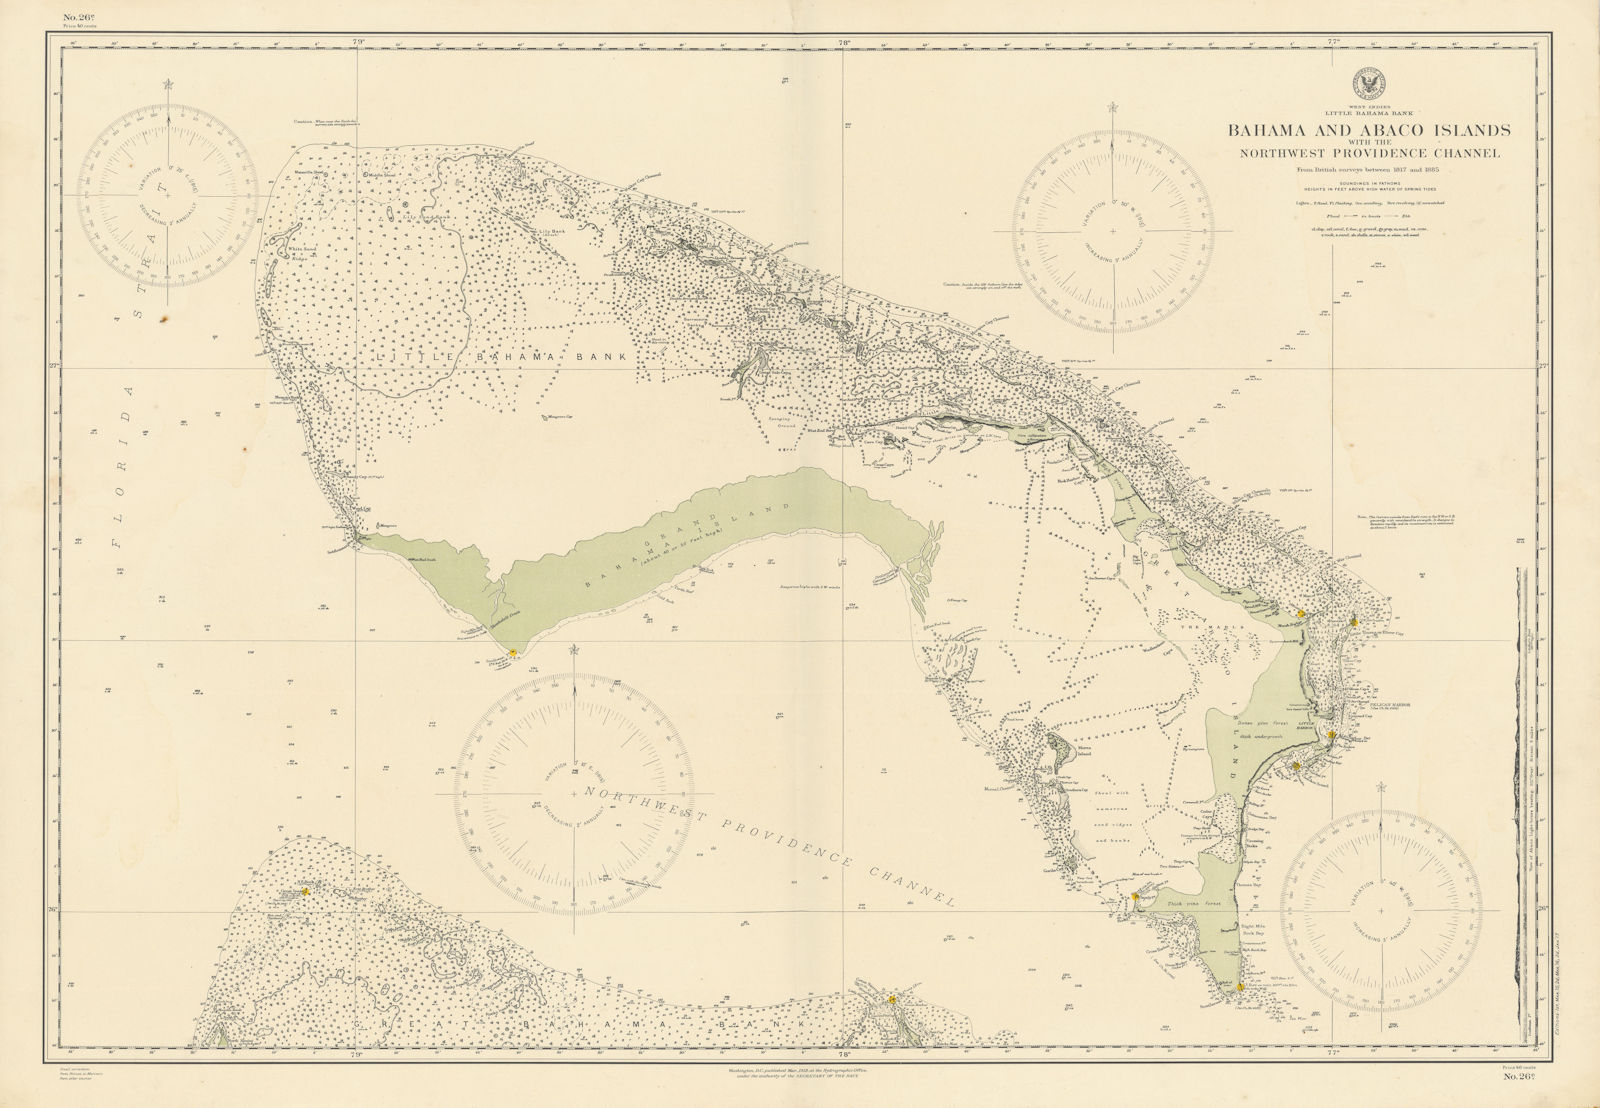 Little Bahama Bank. Grand Bahama Great Abaco Islands. US Navy sea chart 1915 map